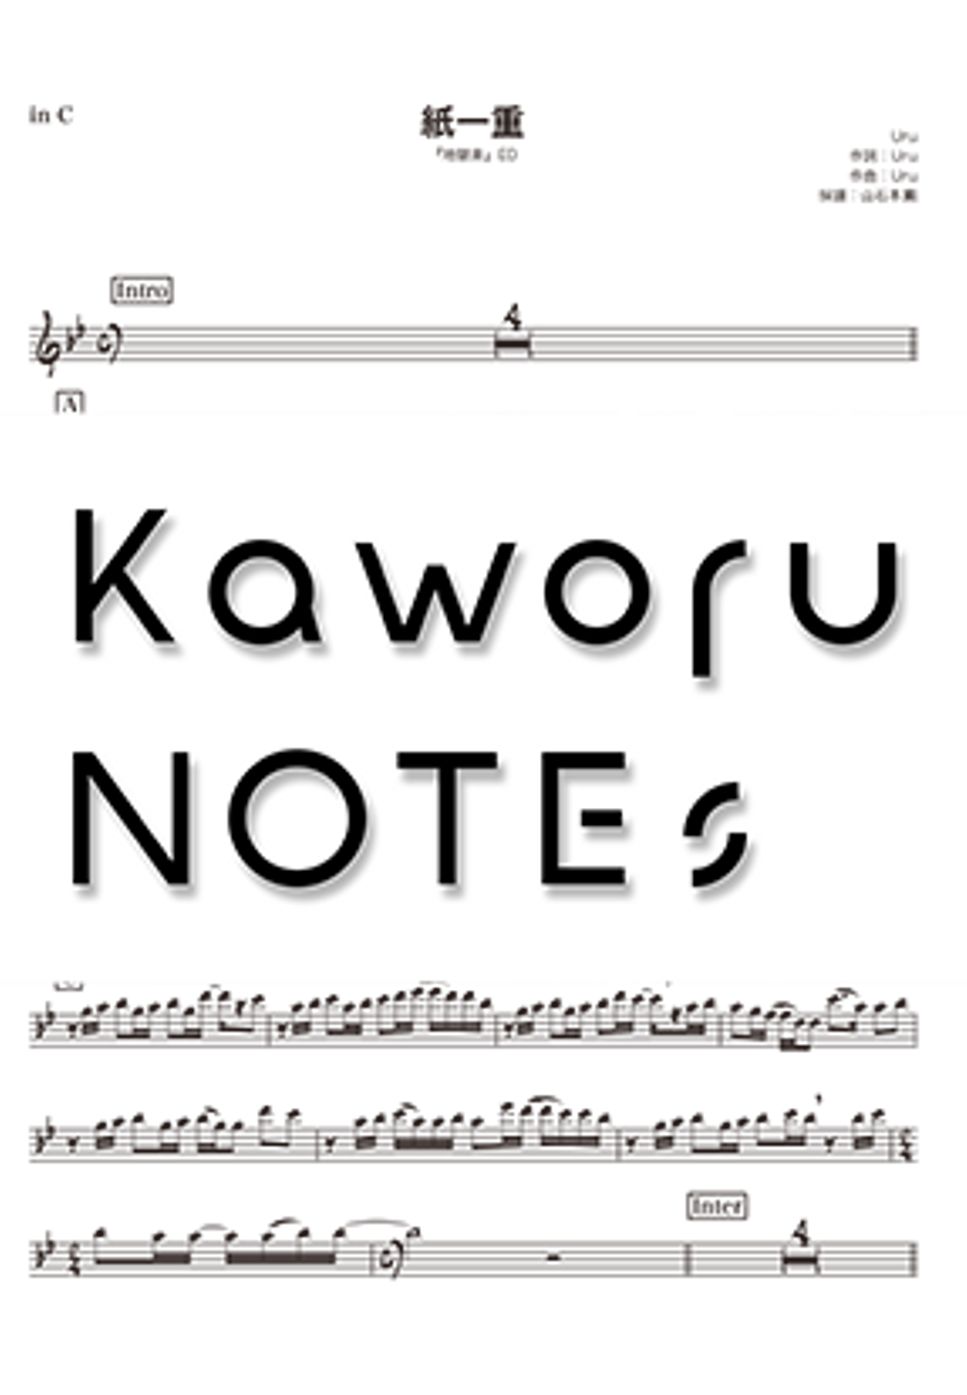 Uru - 紙一重（in F『地獄楽』） by Kaworu NOTEs